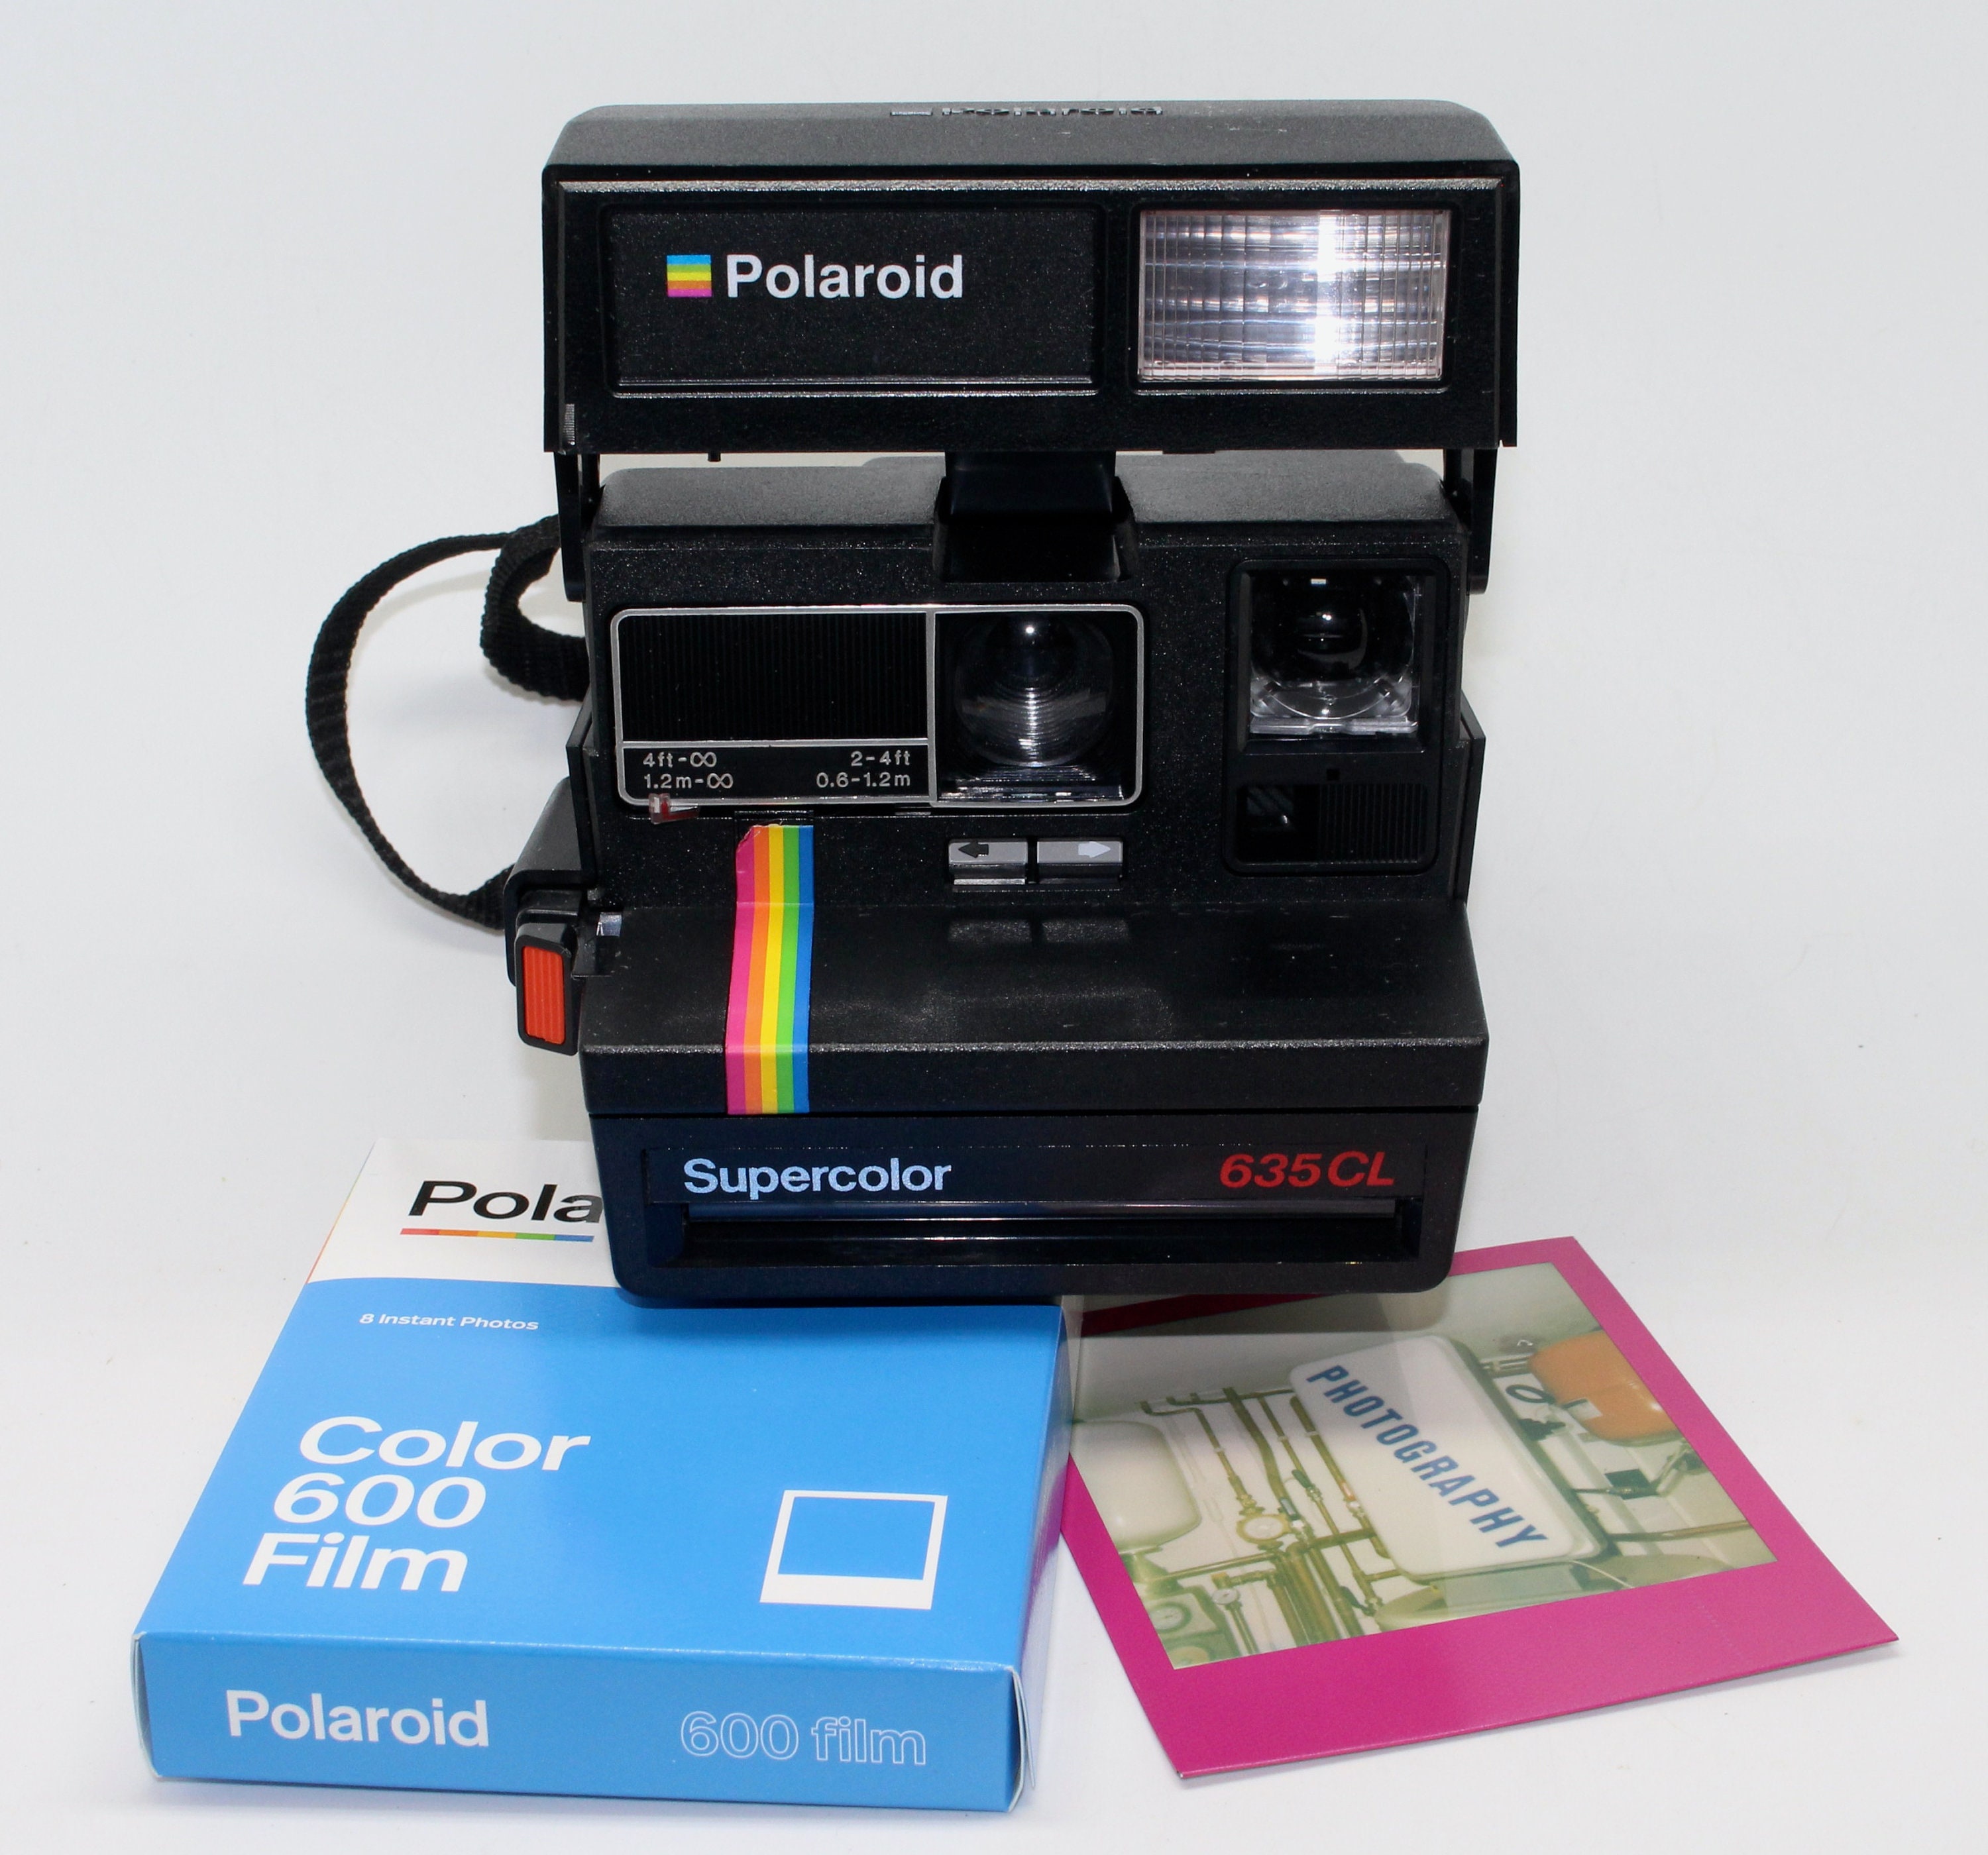 Polaroid Supercolor 635CL Instant Camera With Brand-new Polaroid